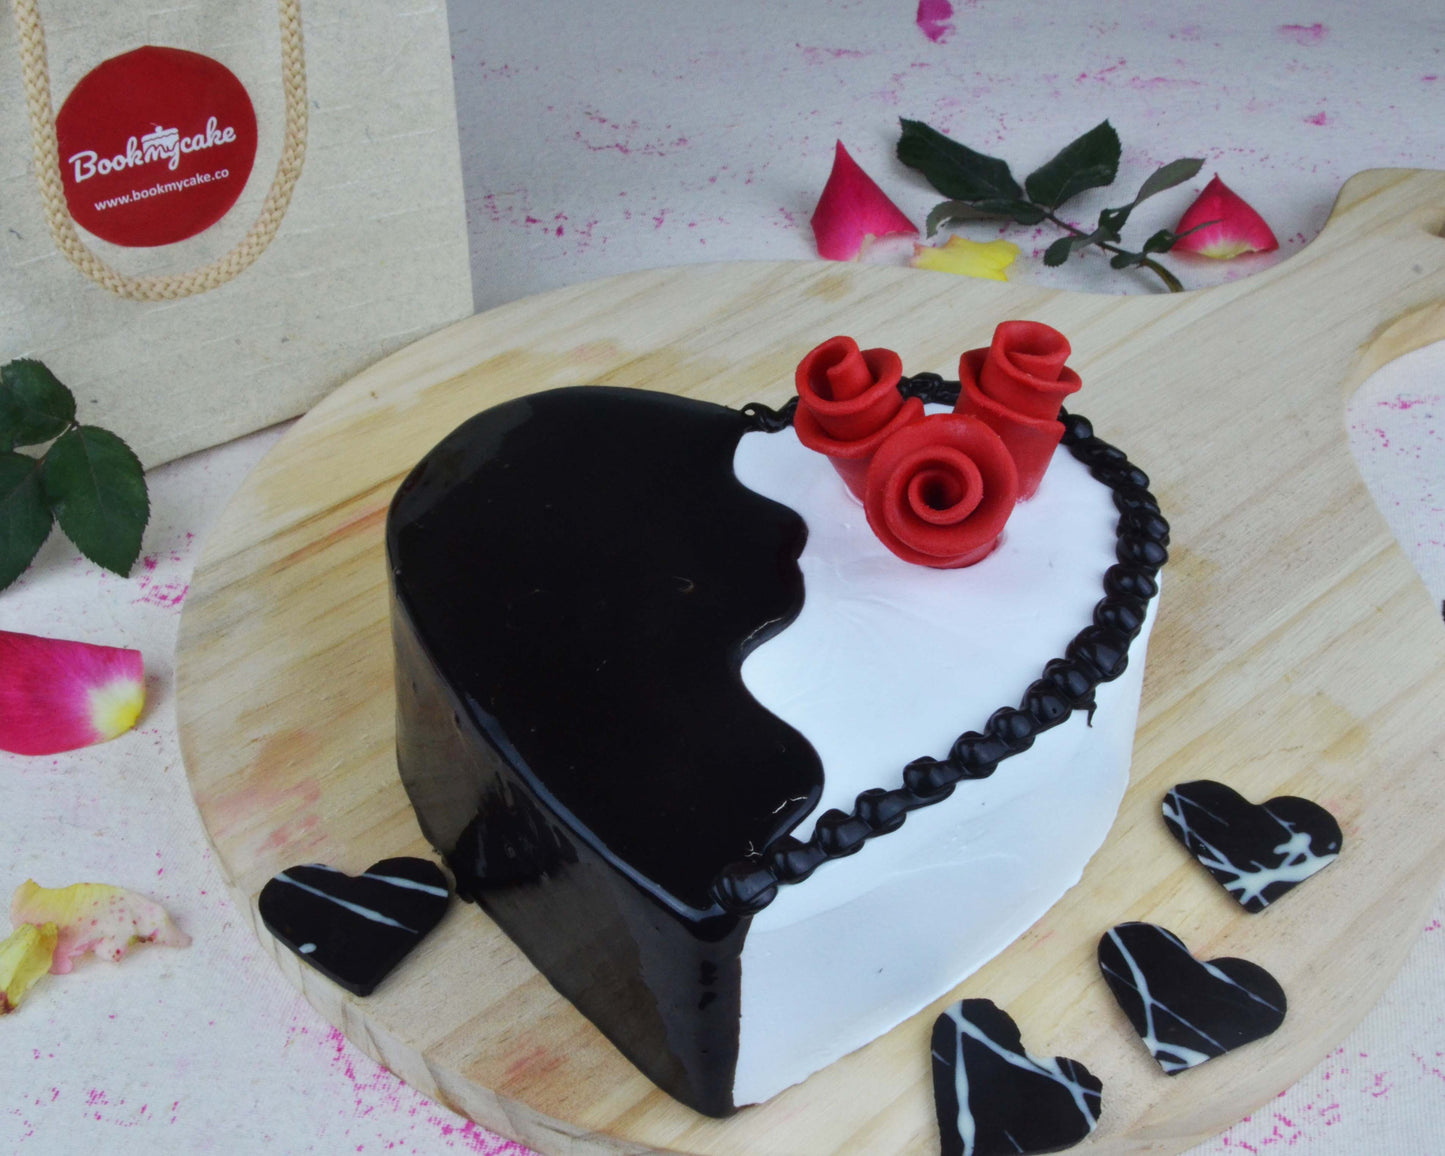 Black And White Heart Cake